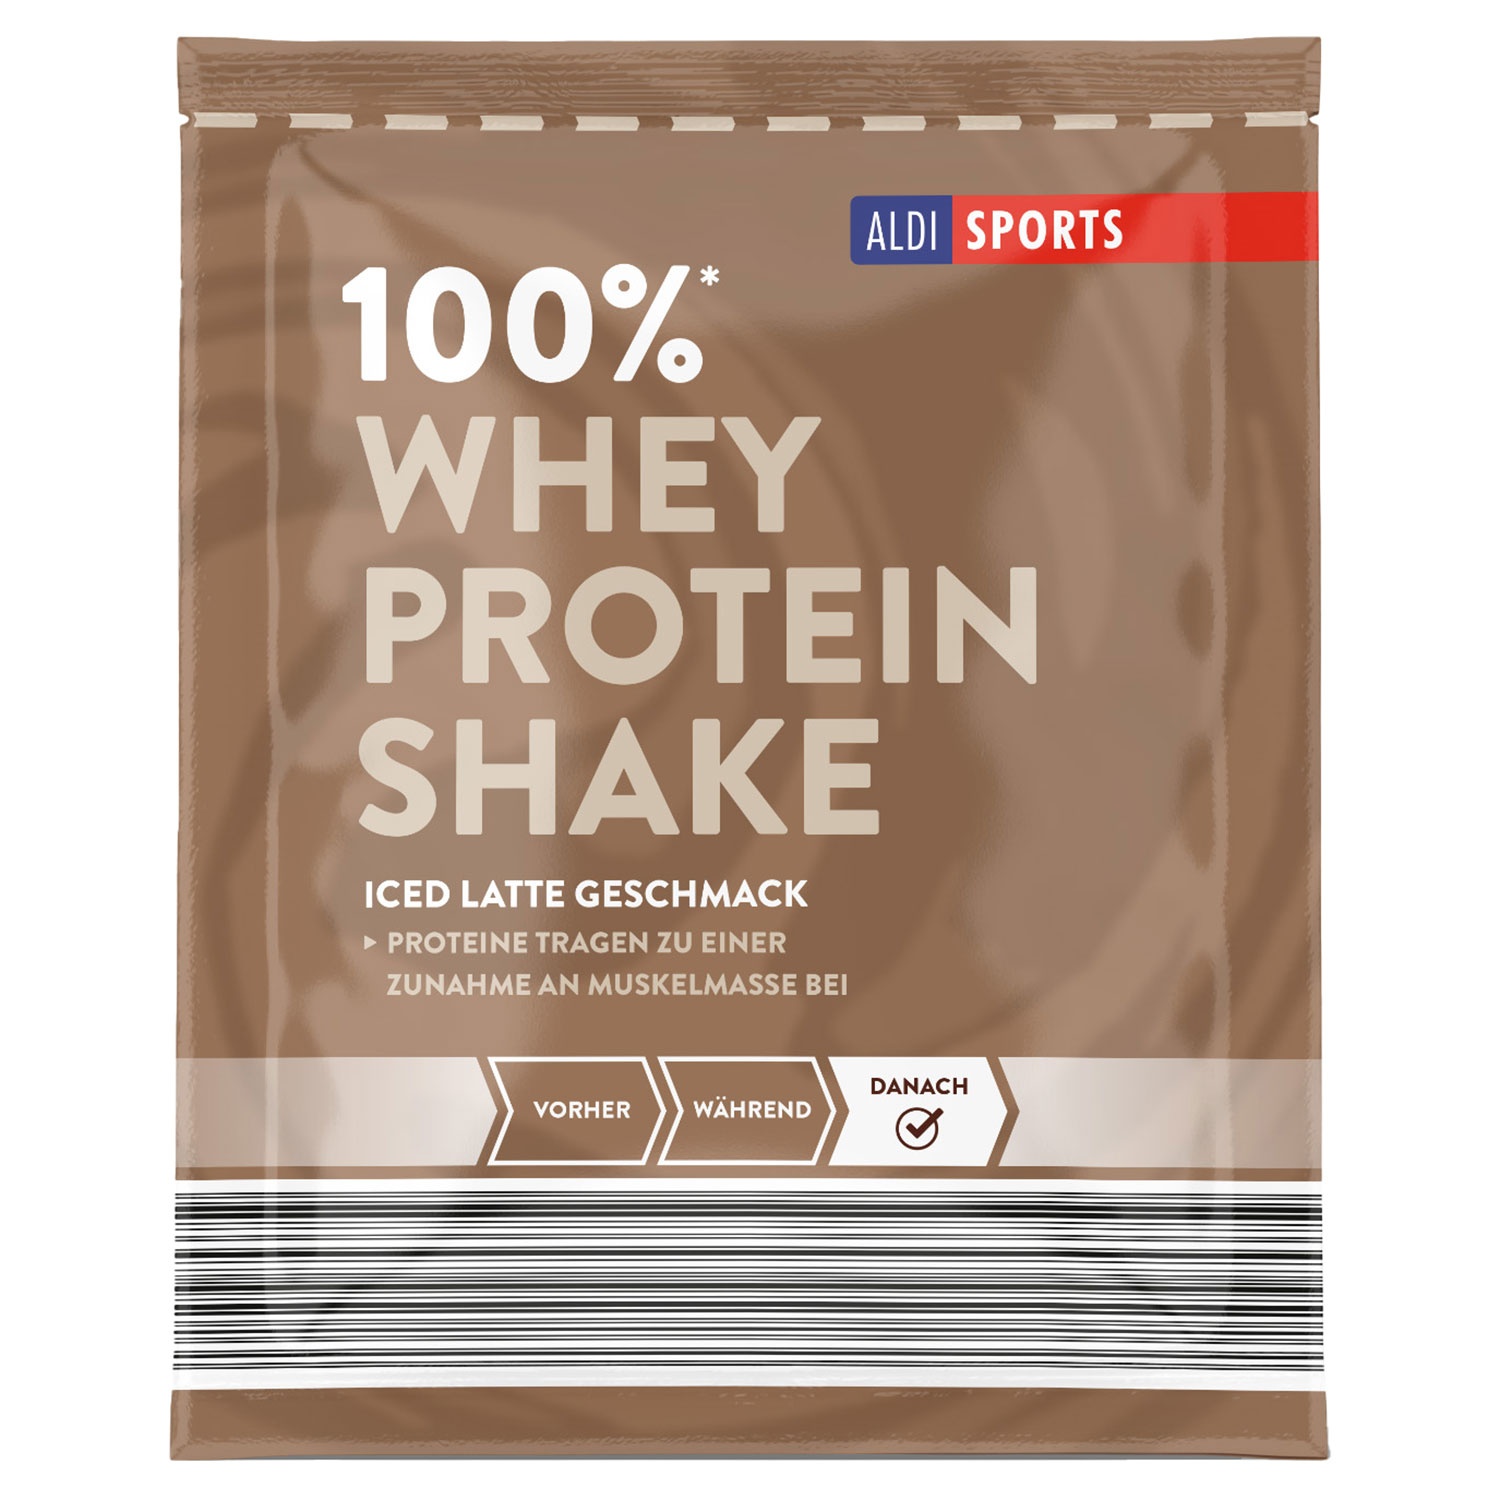 ALDI SPORTS Whey-Protein-Shake 30 g